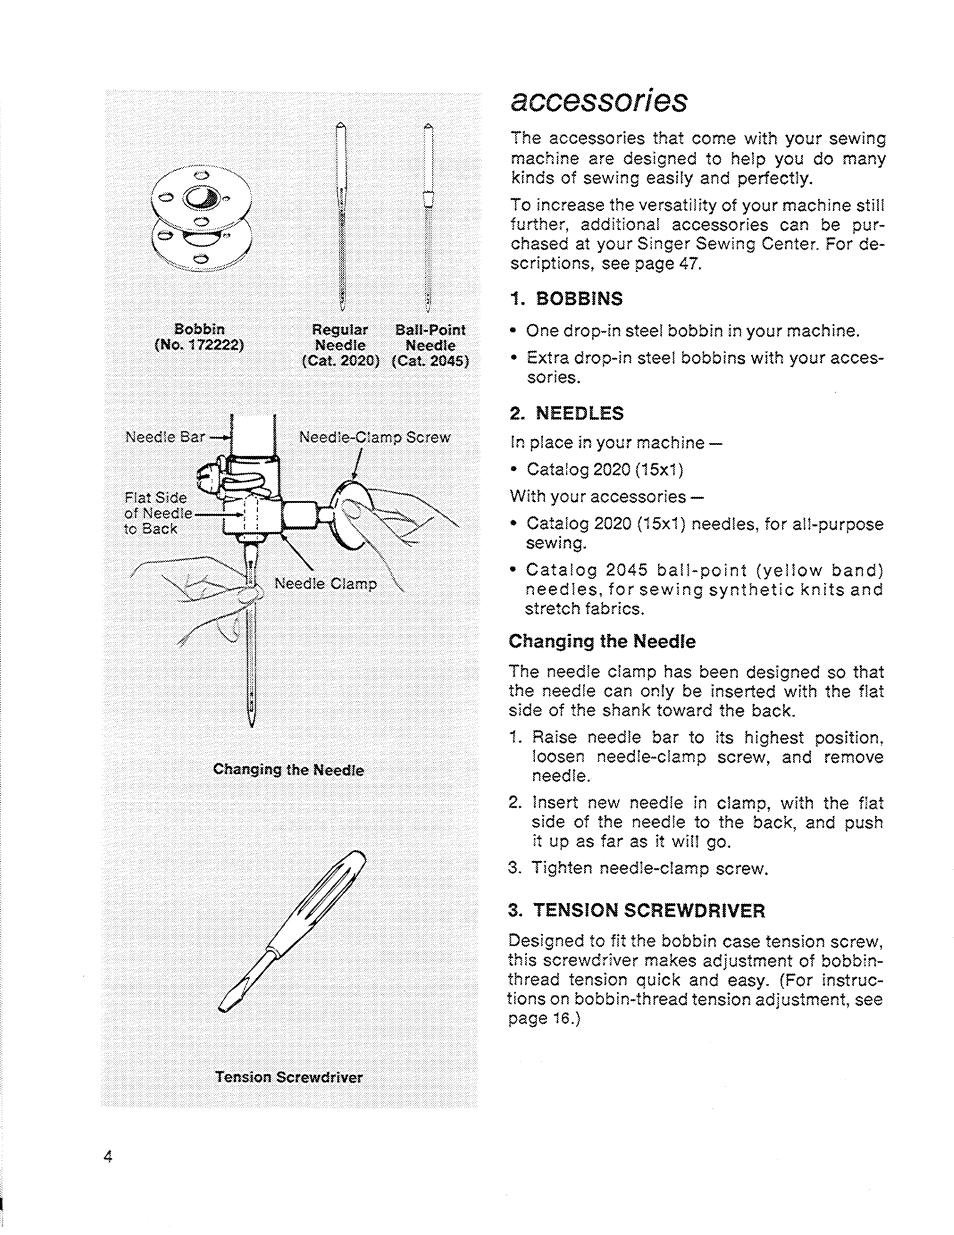 Accessories, 1, bobbins, Needles | Tension screwdriver | SINGER 714 Graduate User Manual | Page 6 / 52